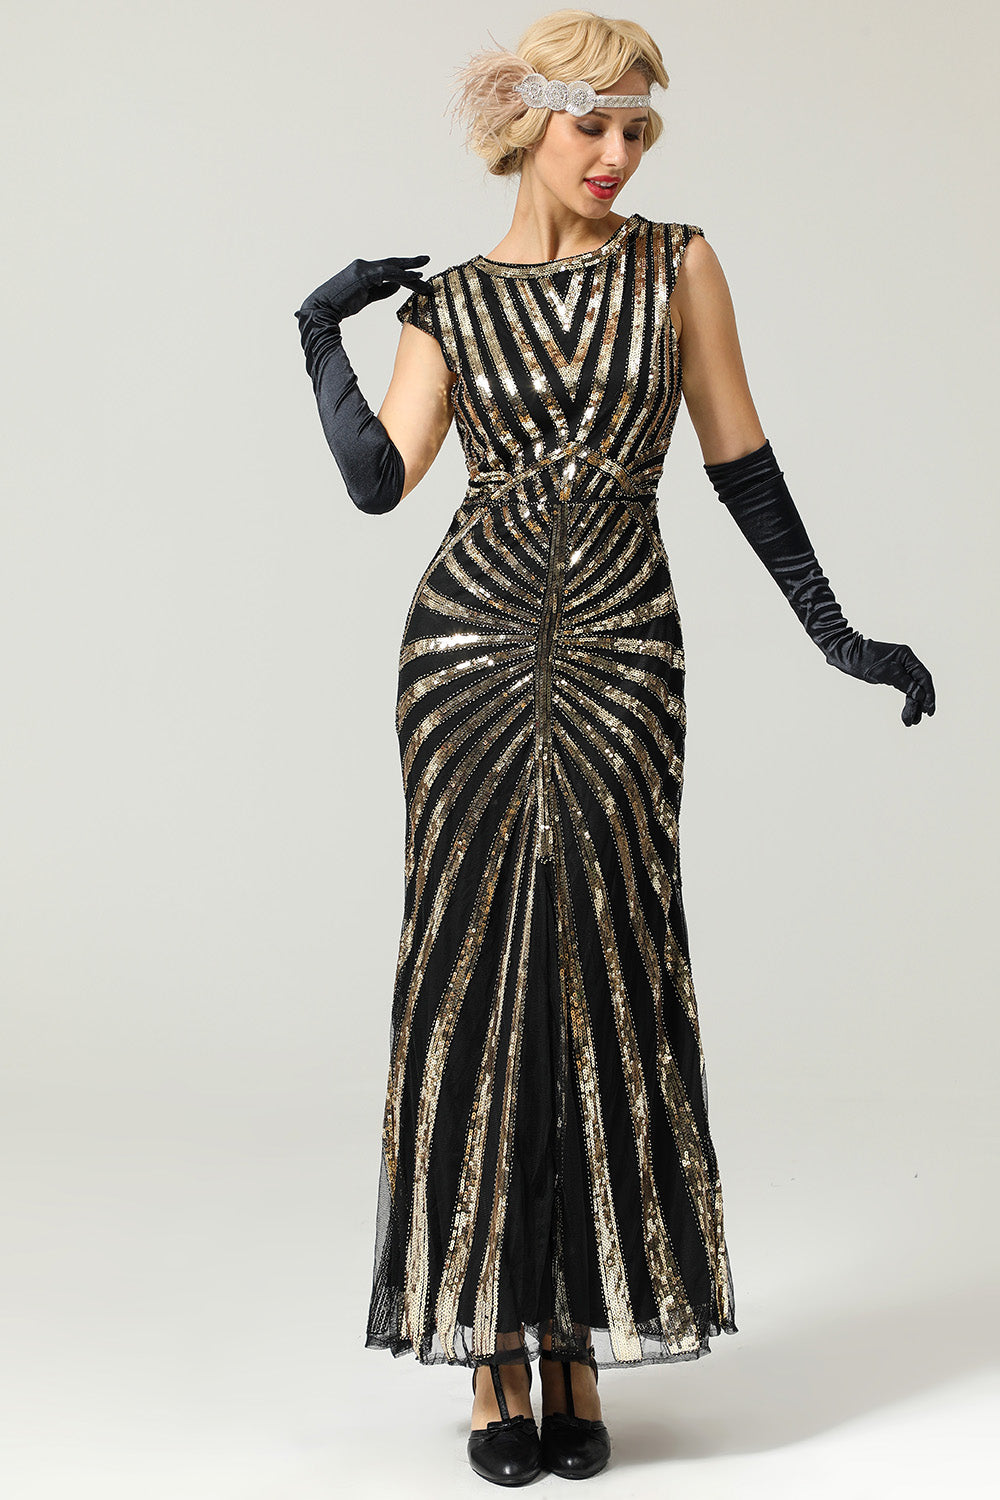 Mermaid 1920s Sequined Flapper Dress